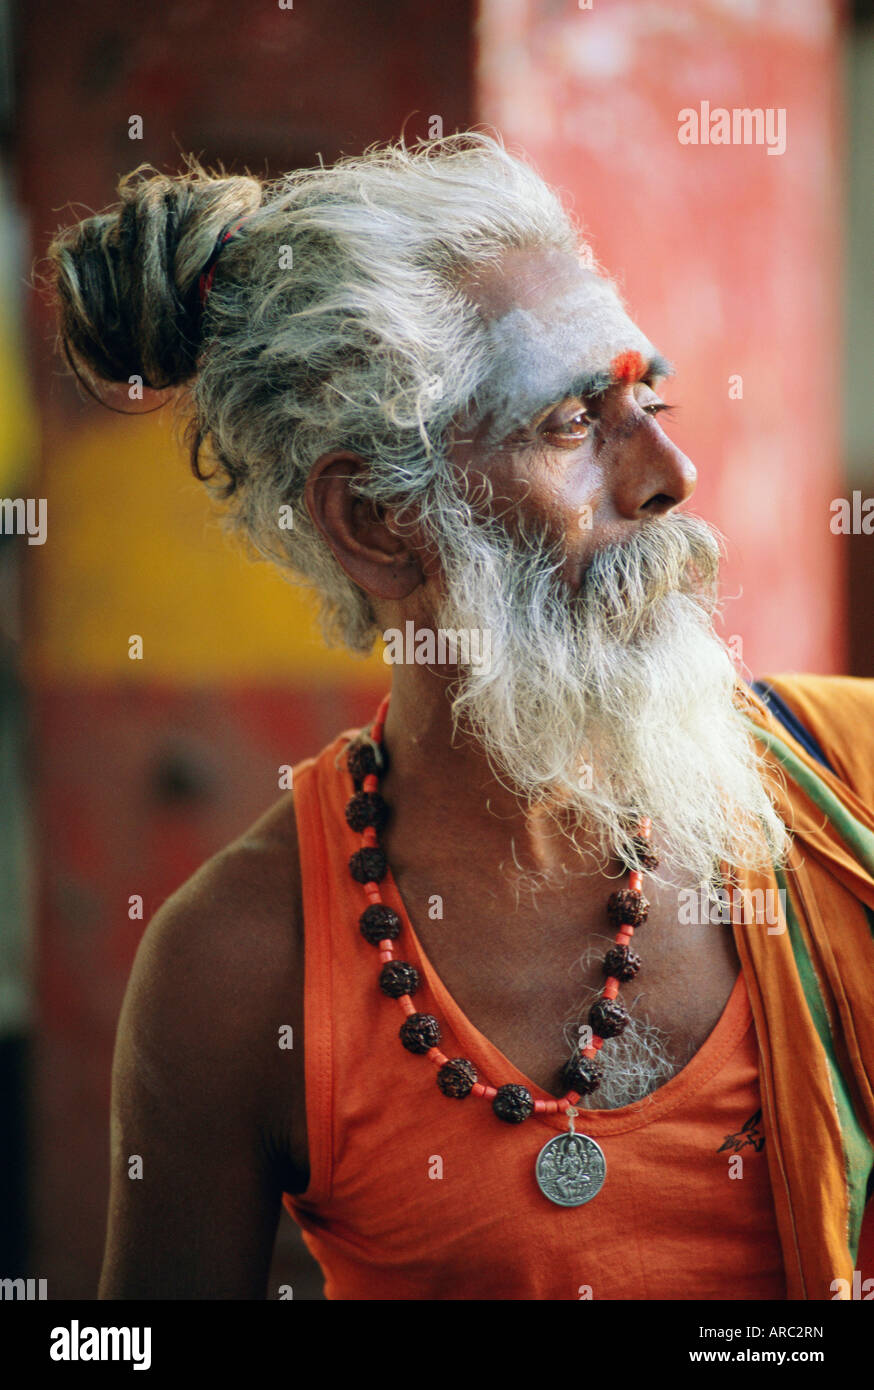 Portrait of a sadhu, a holy man, Jaipur, Rajasthan State, India Stock Photo